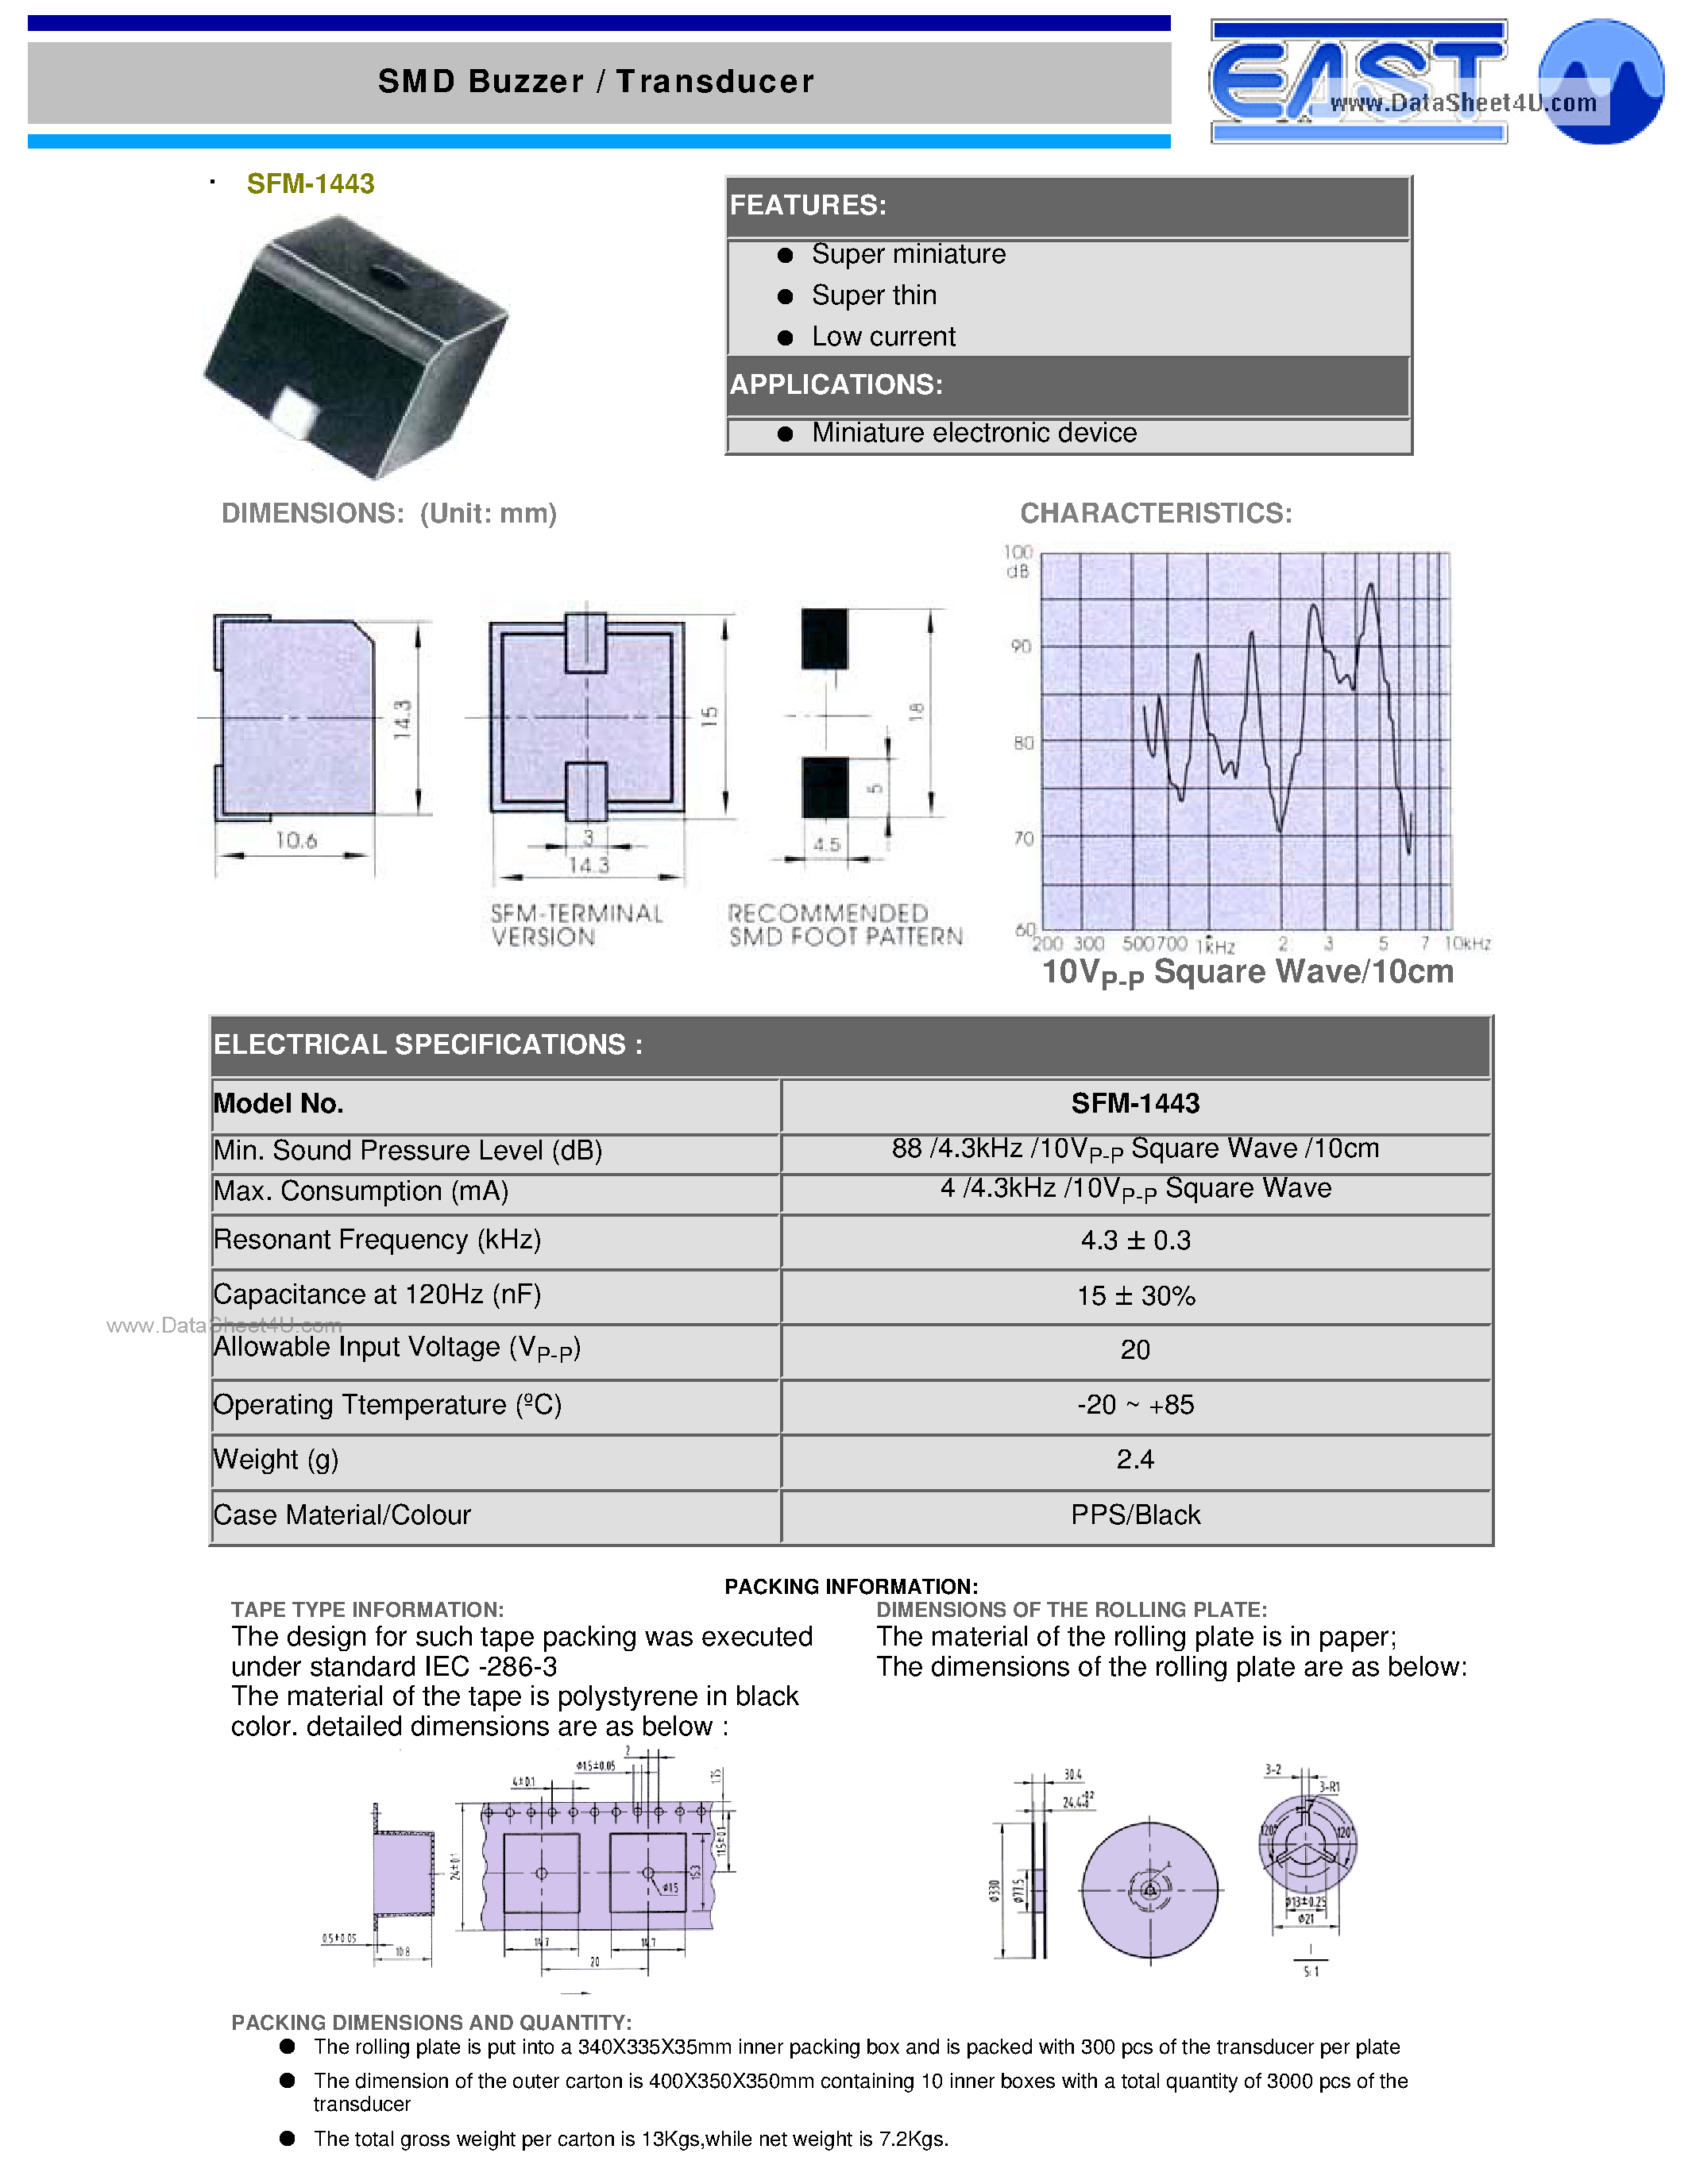 Datasheet SFM-1443 - SMD Buzzer / Transducer page 1